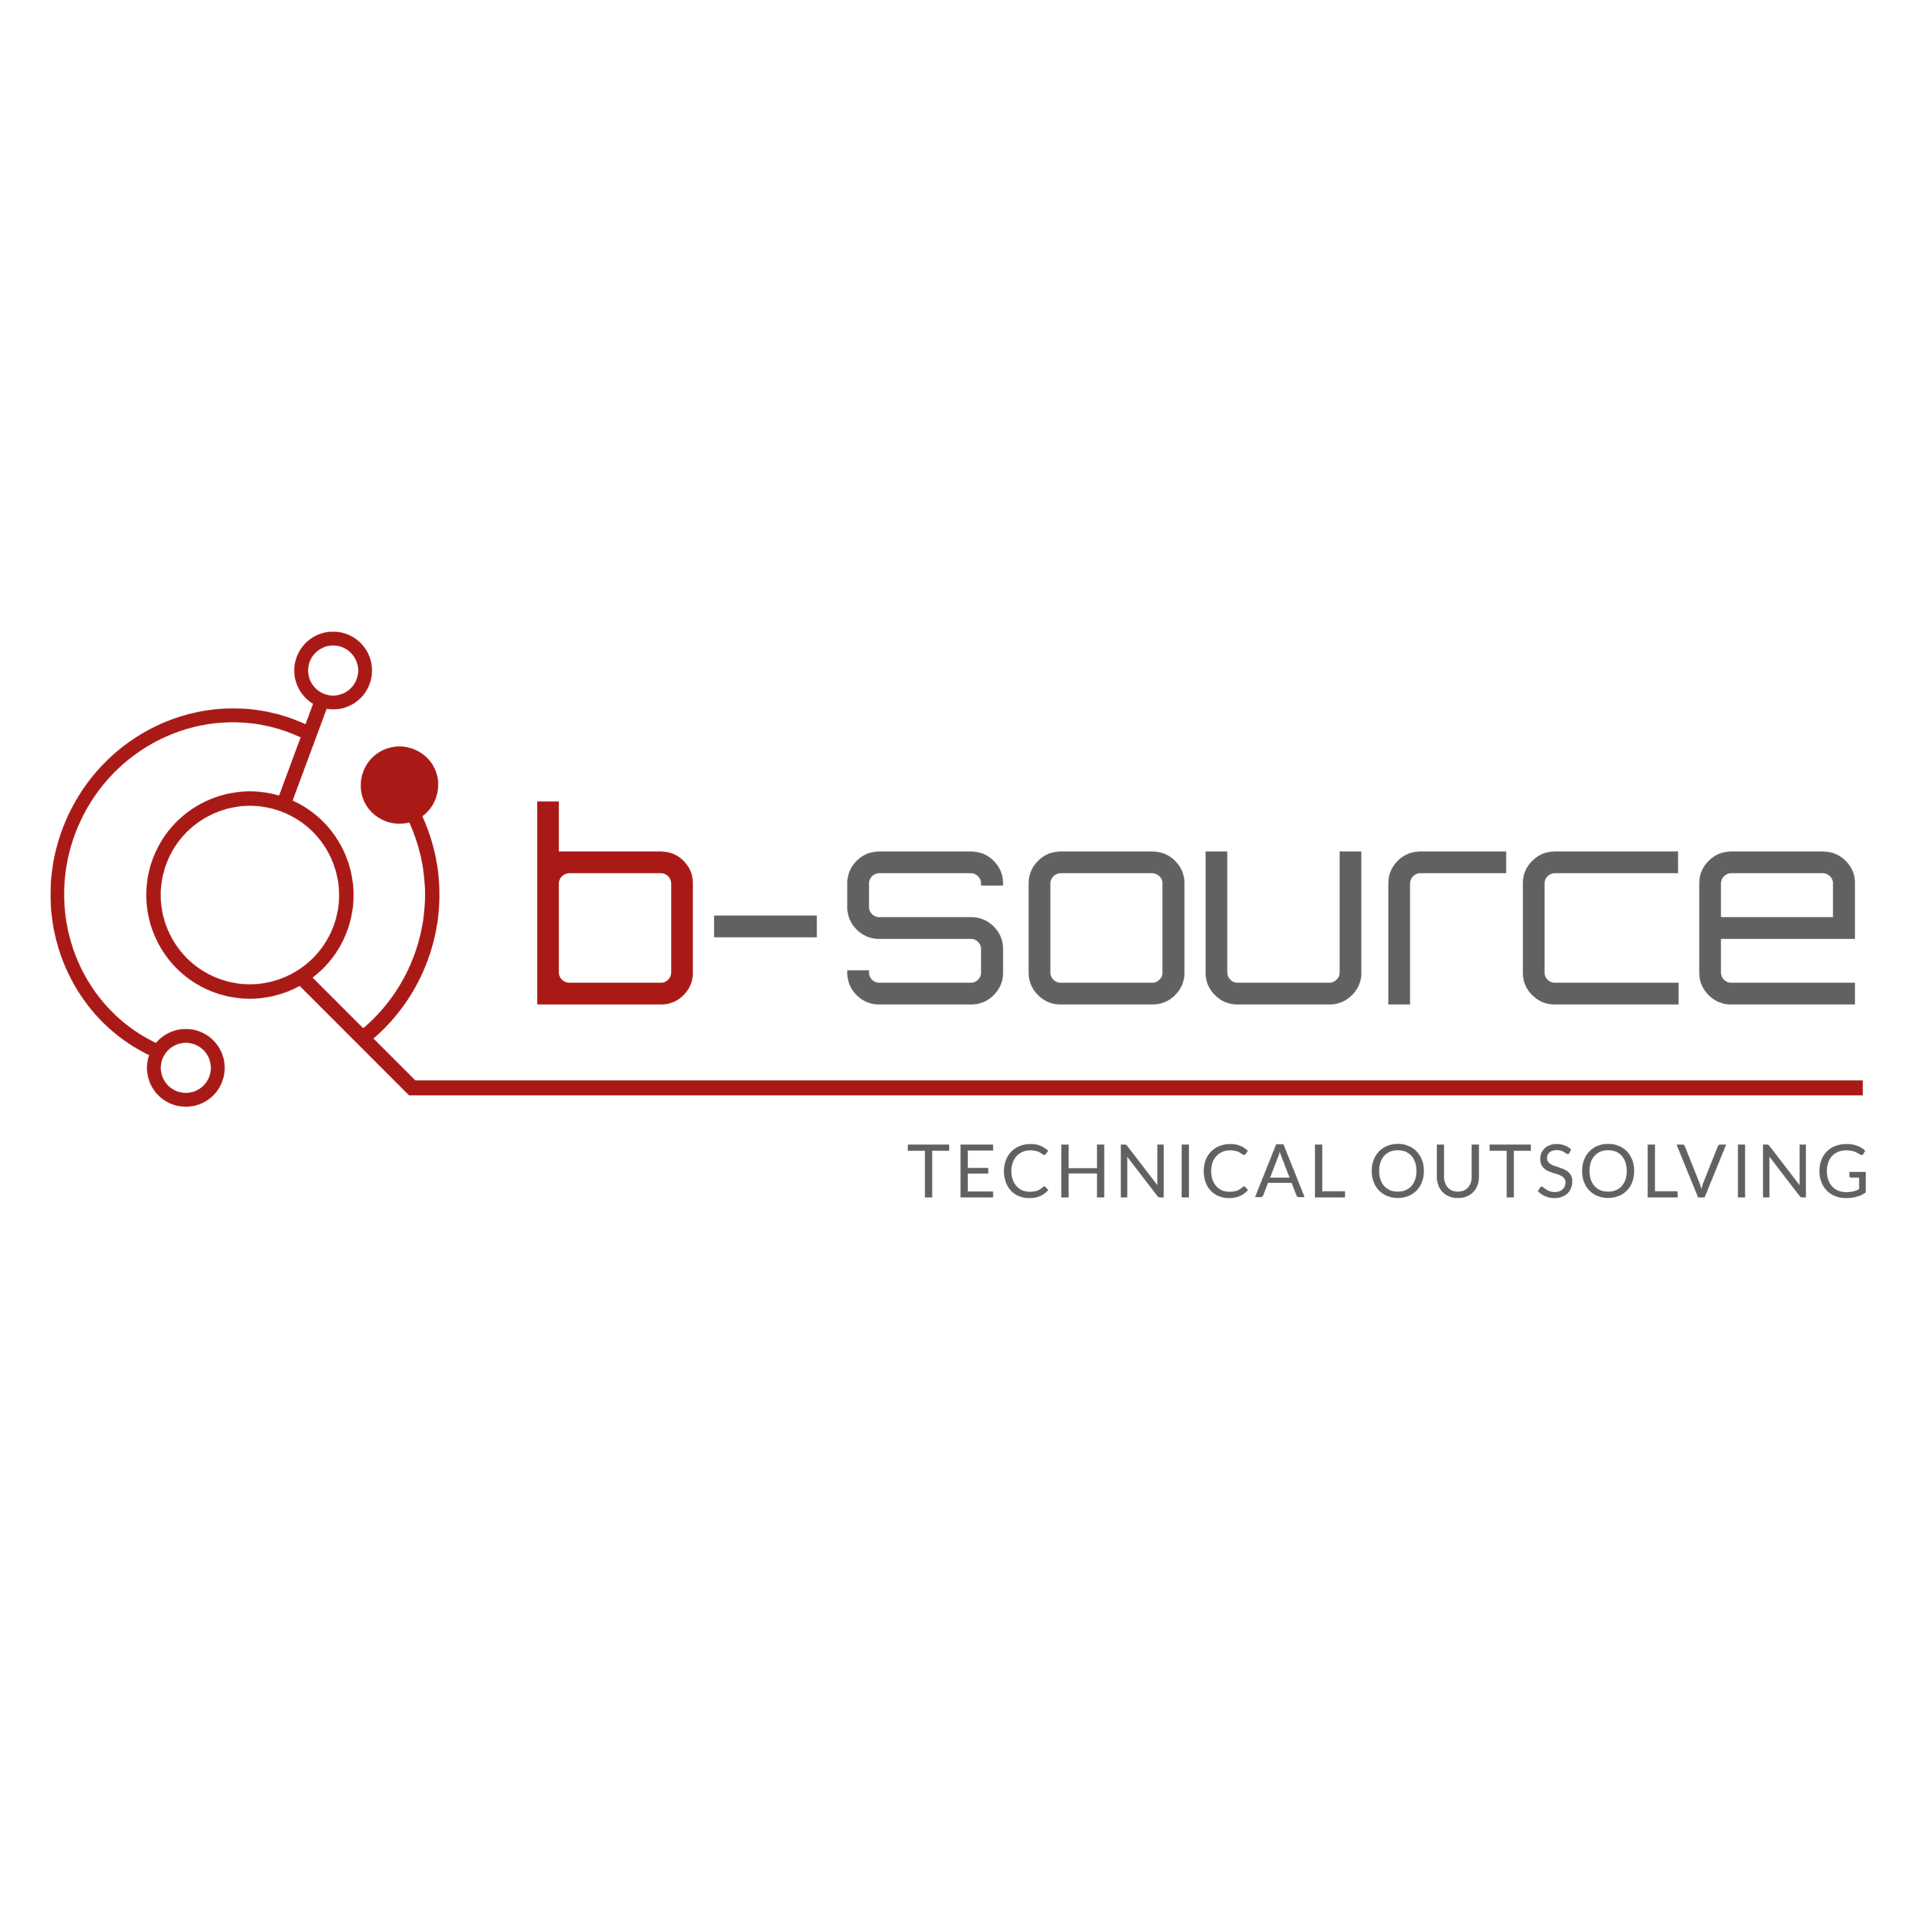 b-source